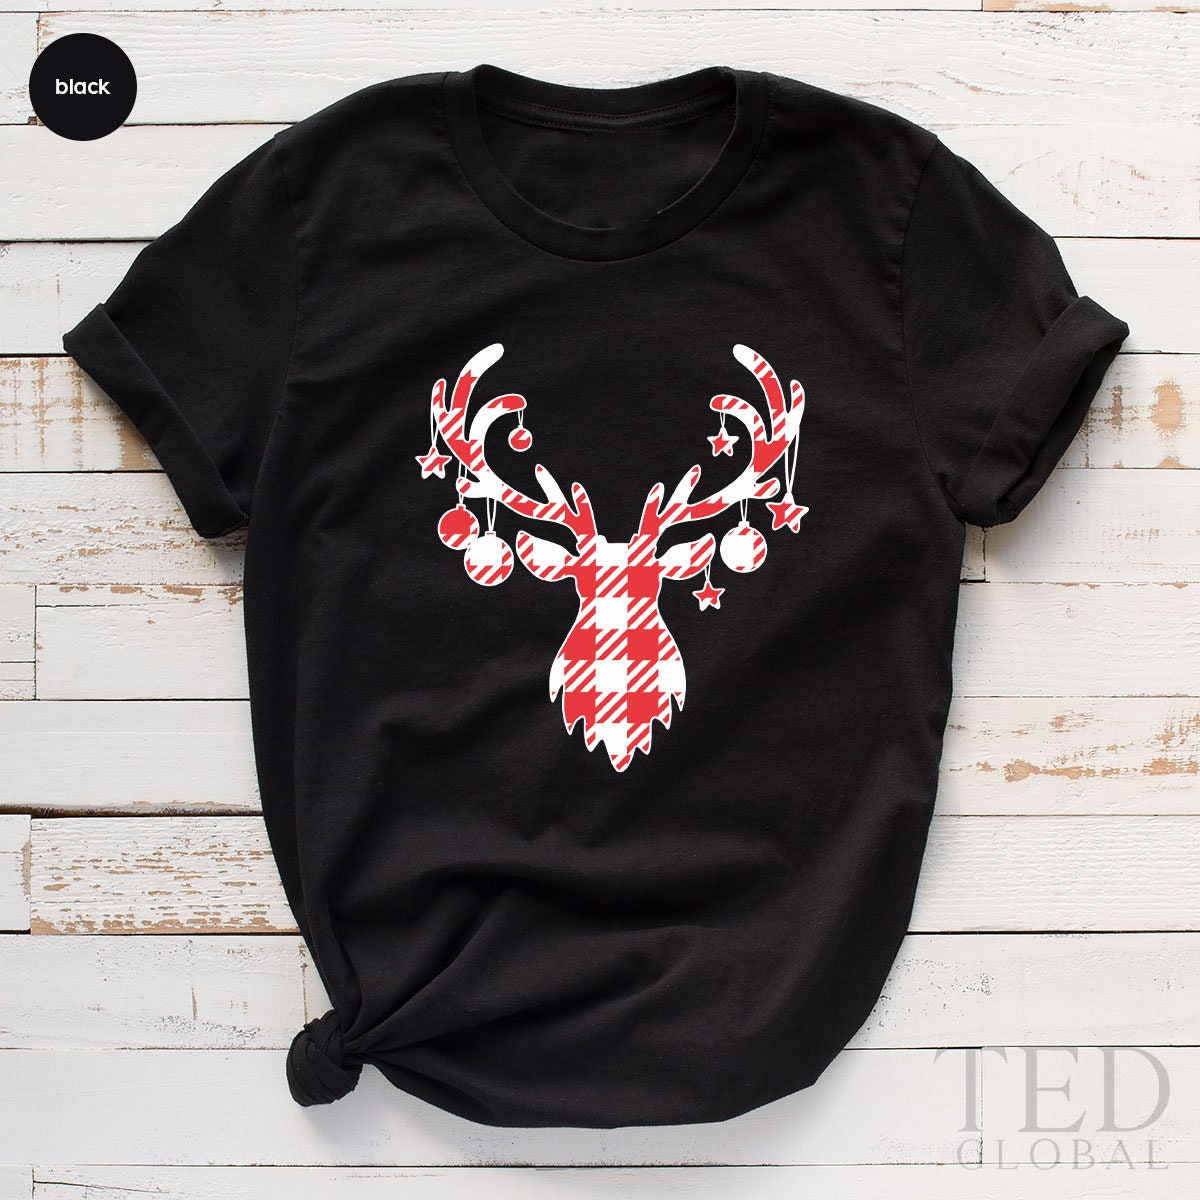 Cute Christmas Pajamas Deer T-Shirt, Family Christmas T Shirt, Holiday Shirts, Happy Winter Shirt, Reindeer Face TShirt, Gift For Christmas - Fastdeliverytees.com